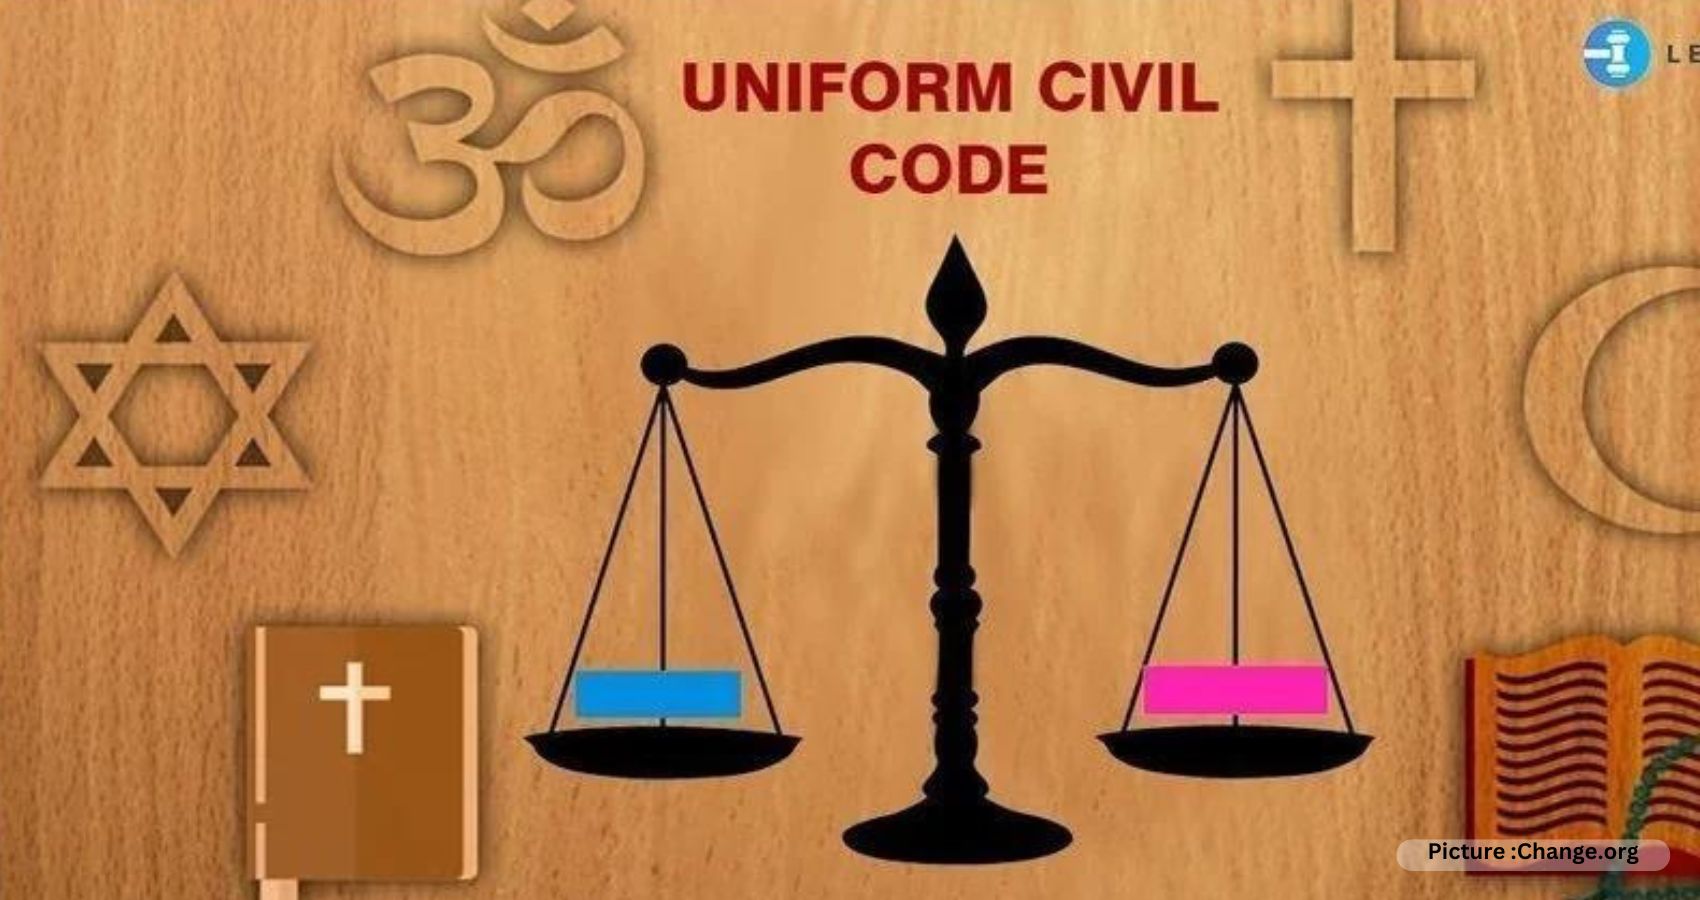 Does India Need Uniform Civil Code?